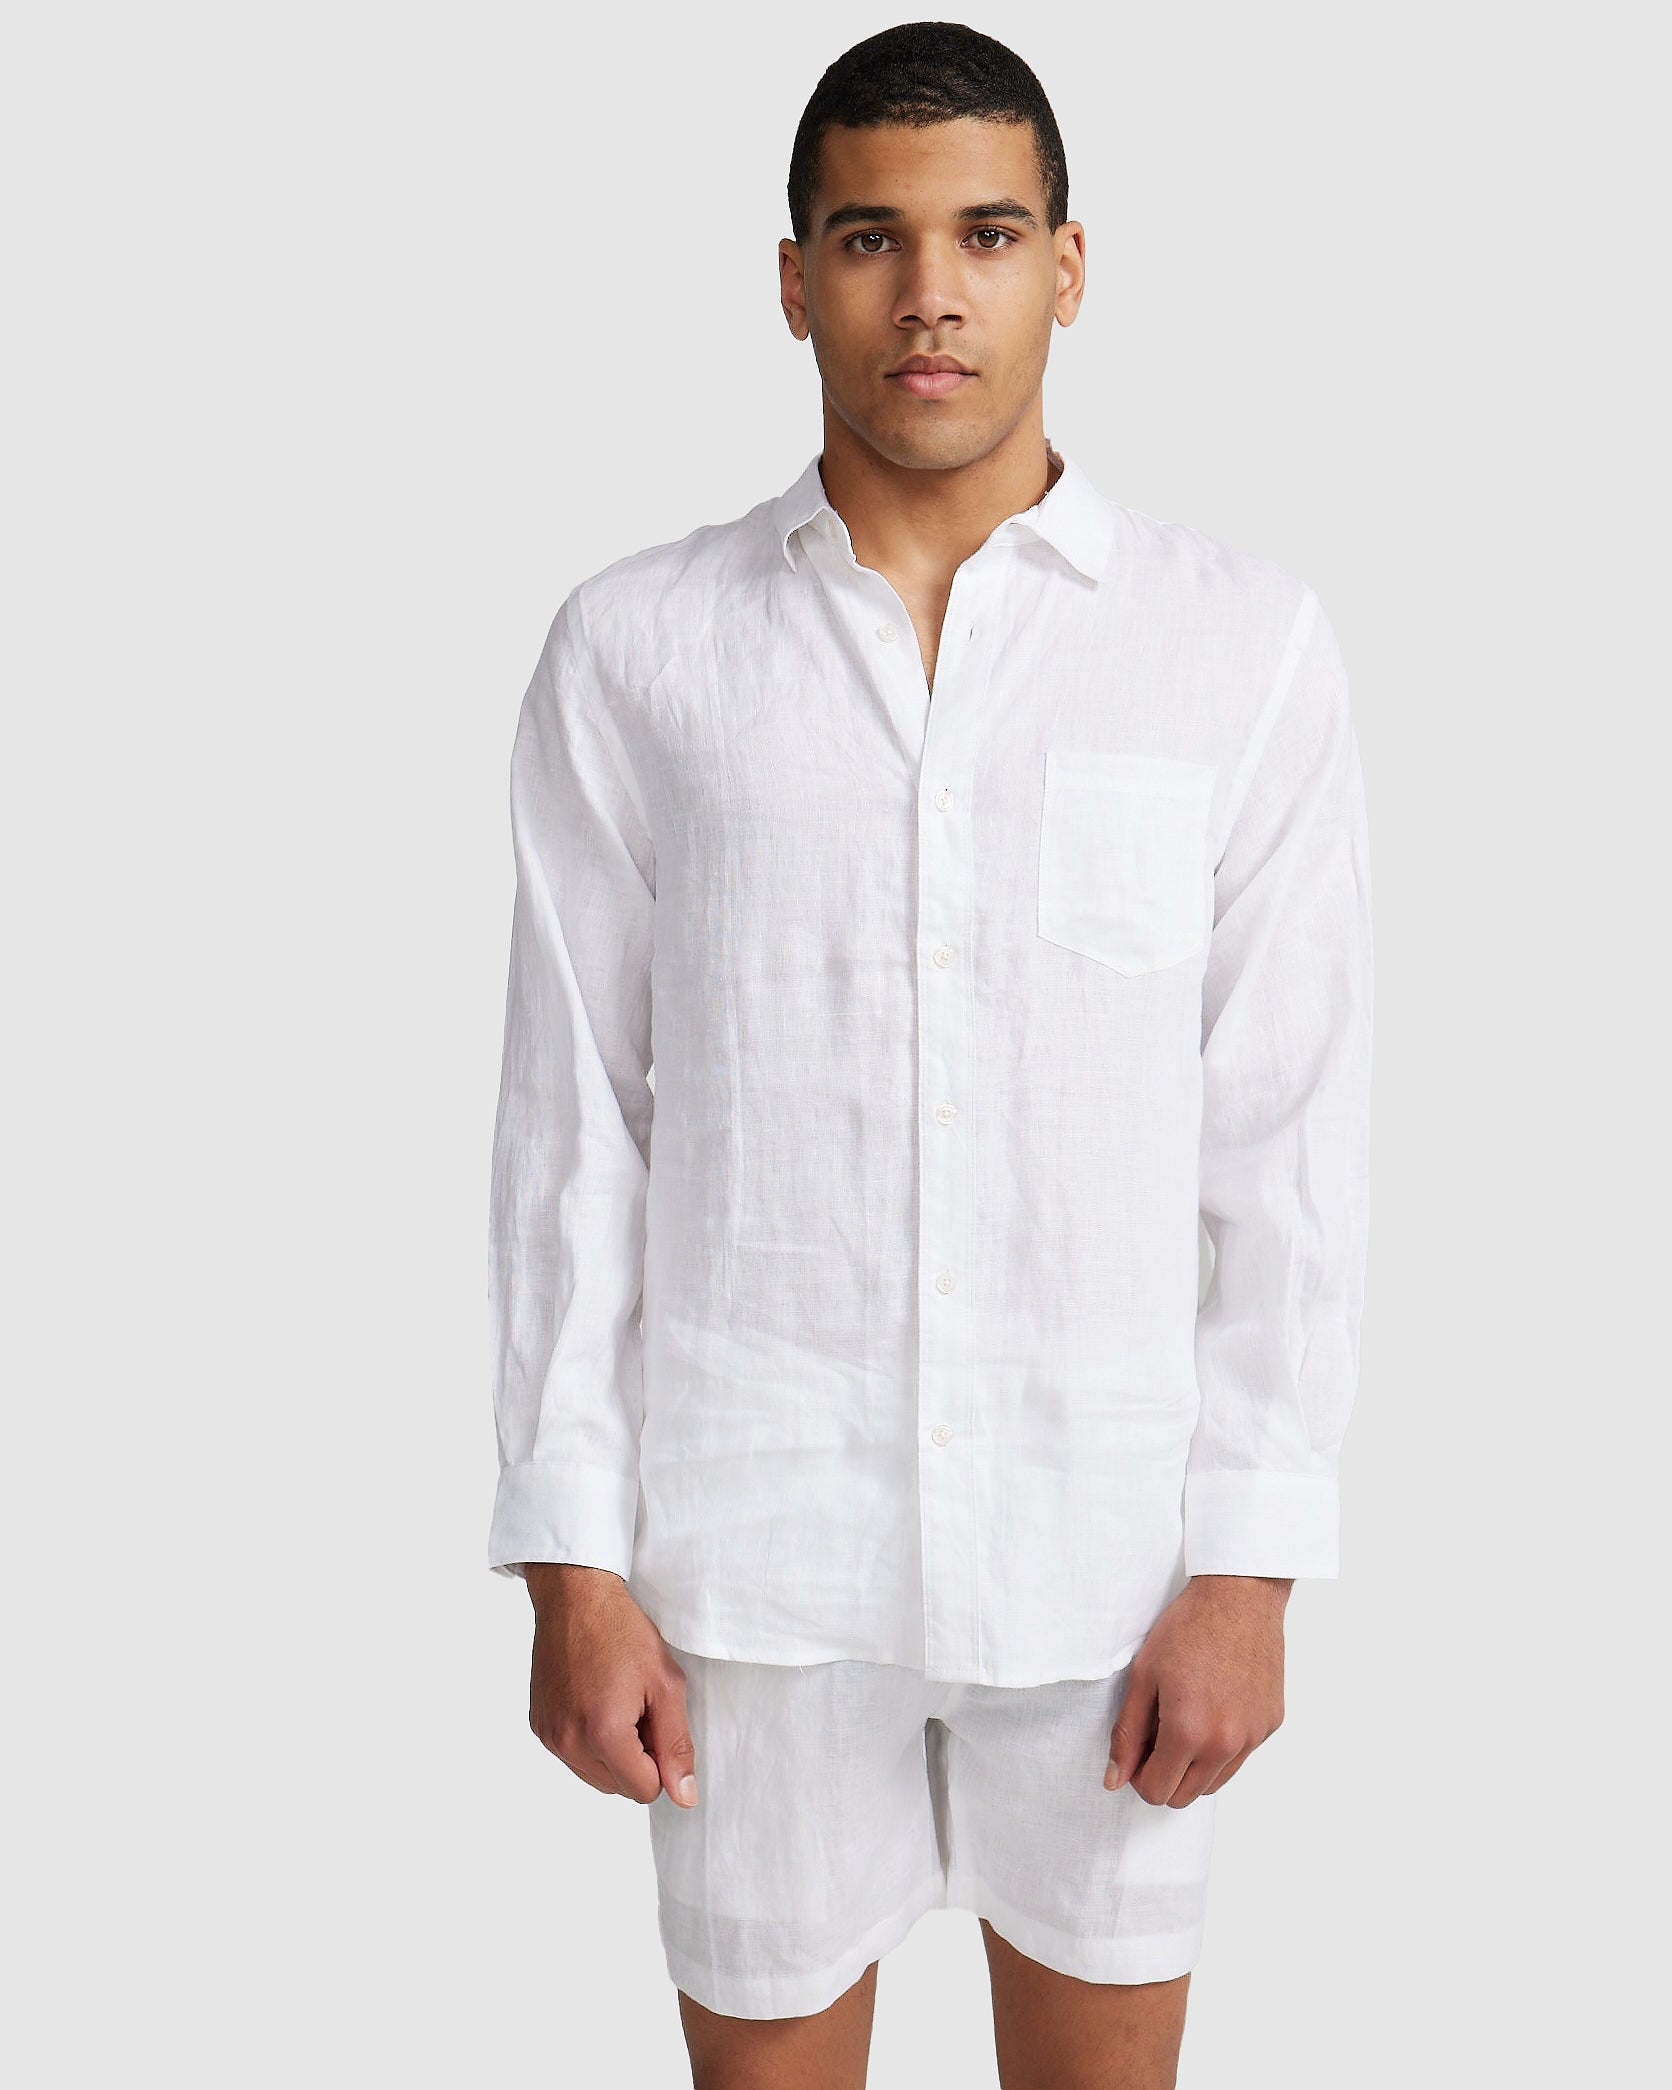 ORTC Mens Linen Shirt